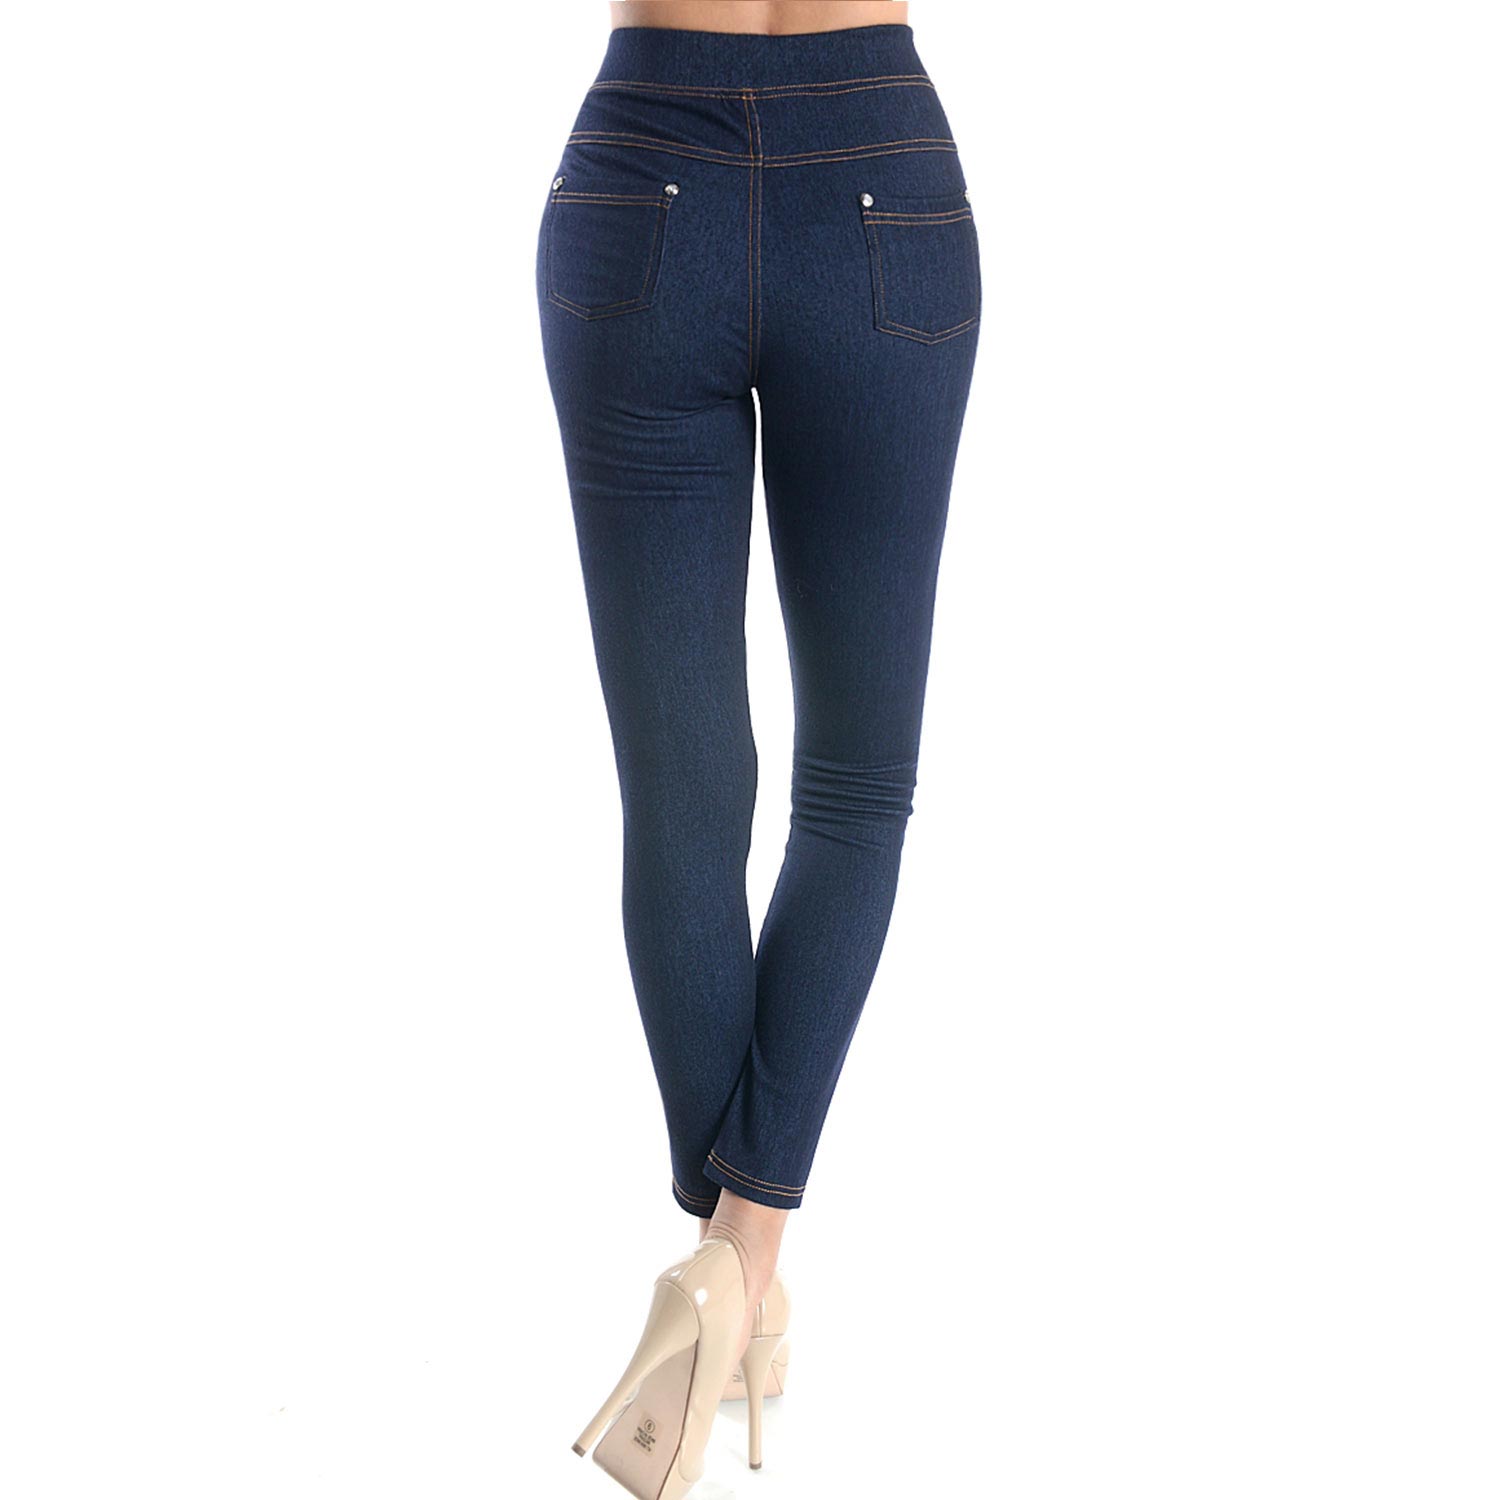 2 Pack Ladies Jeans Leggings W/ Back Pockets